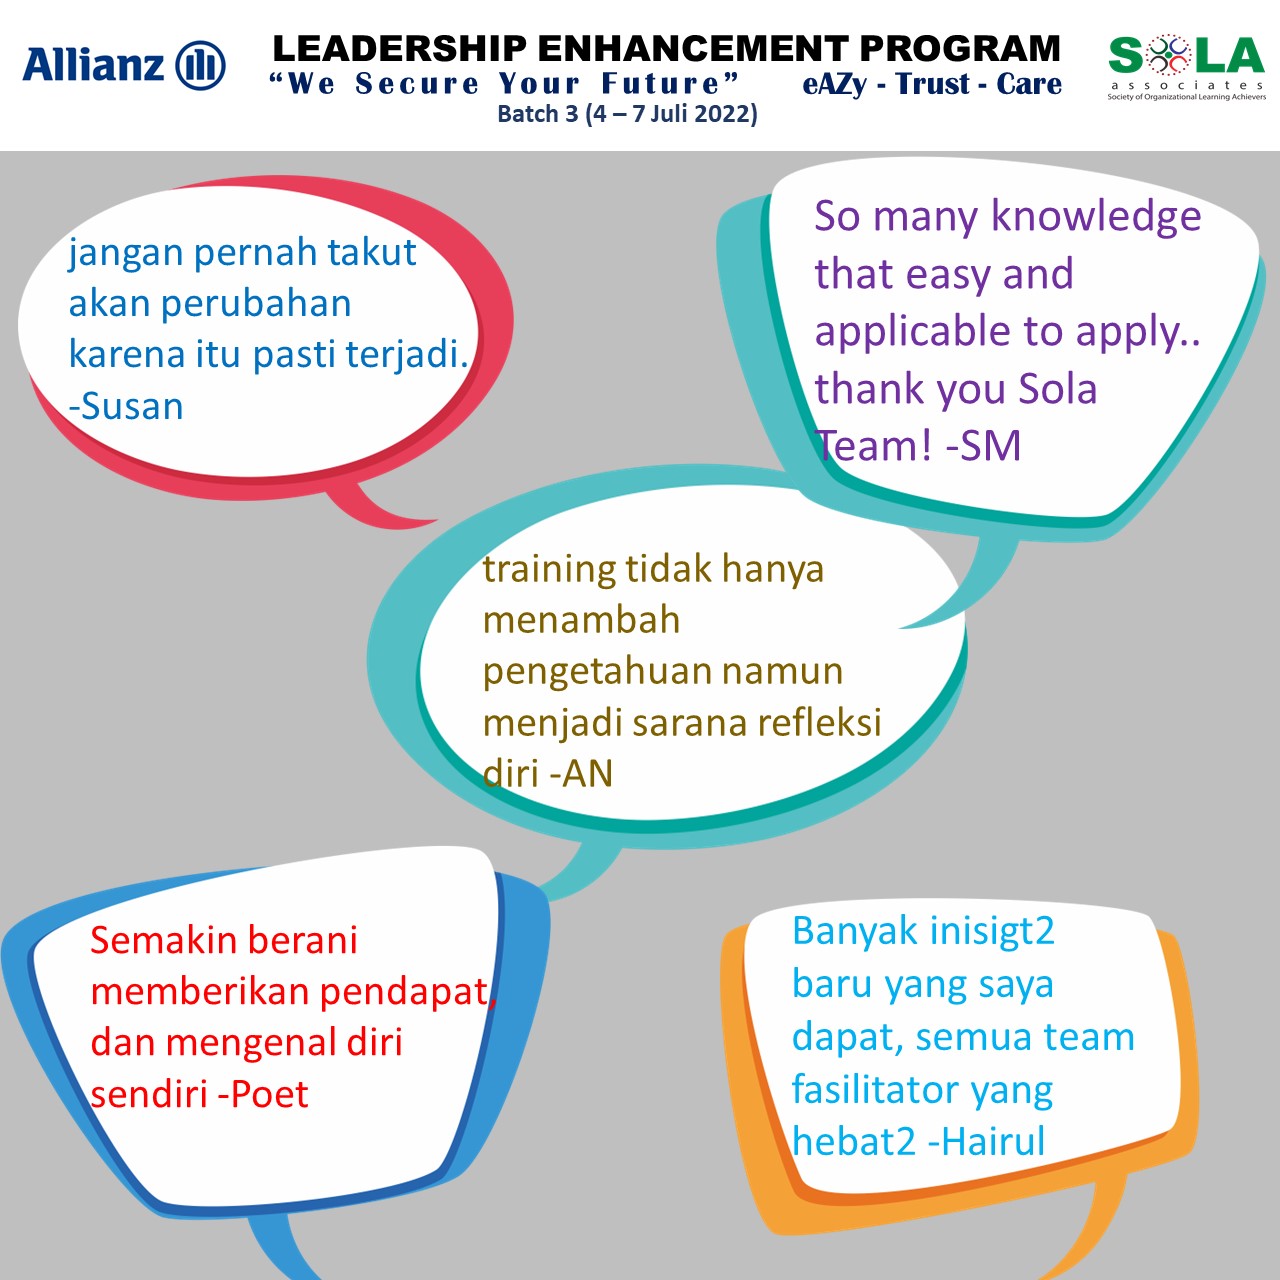 Leadership Enhancement Program AllianzU Batch 3-1